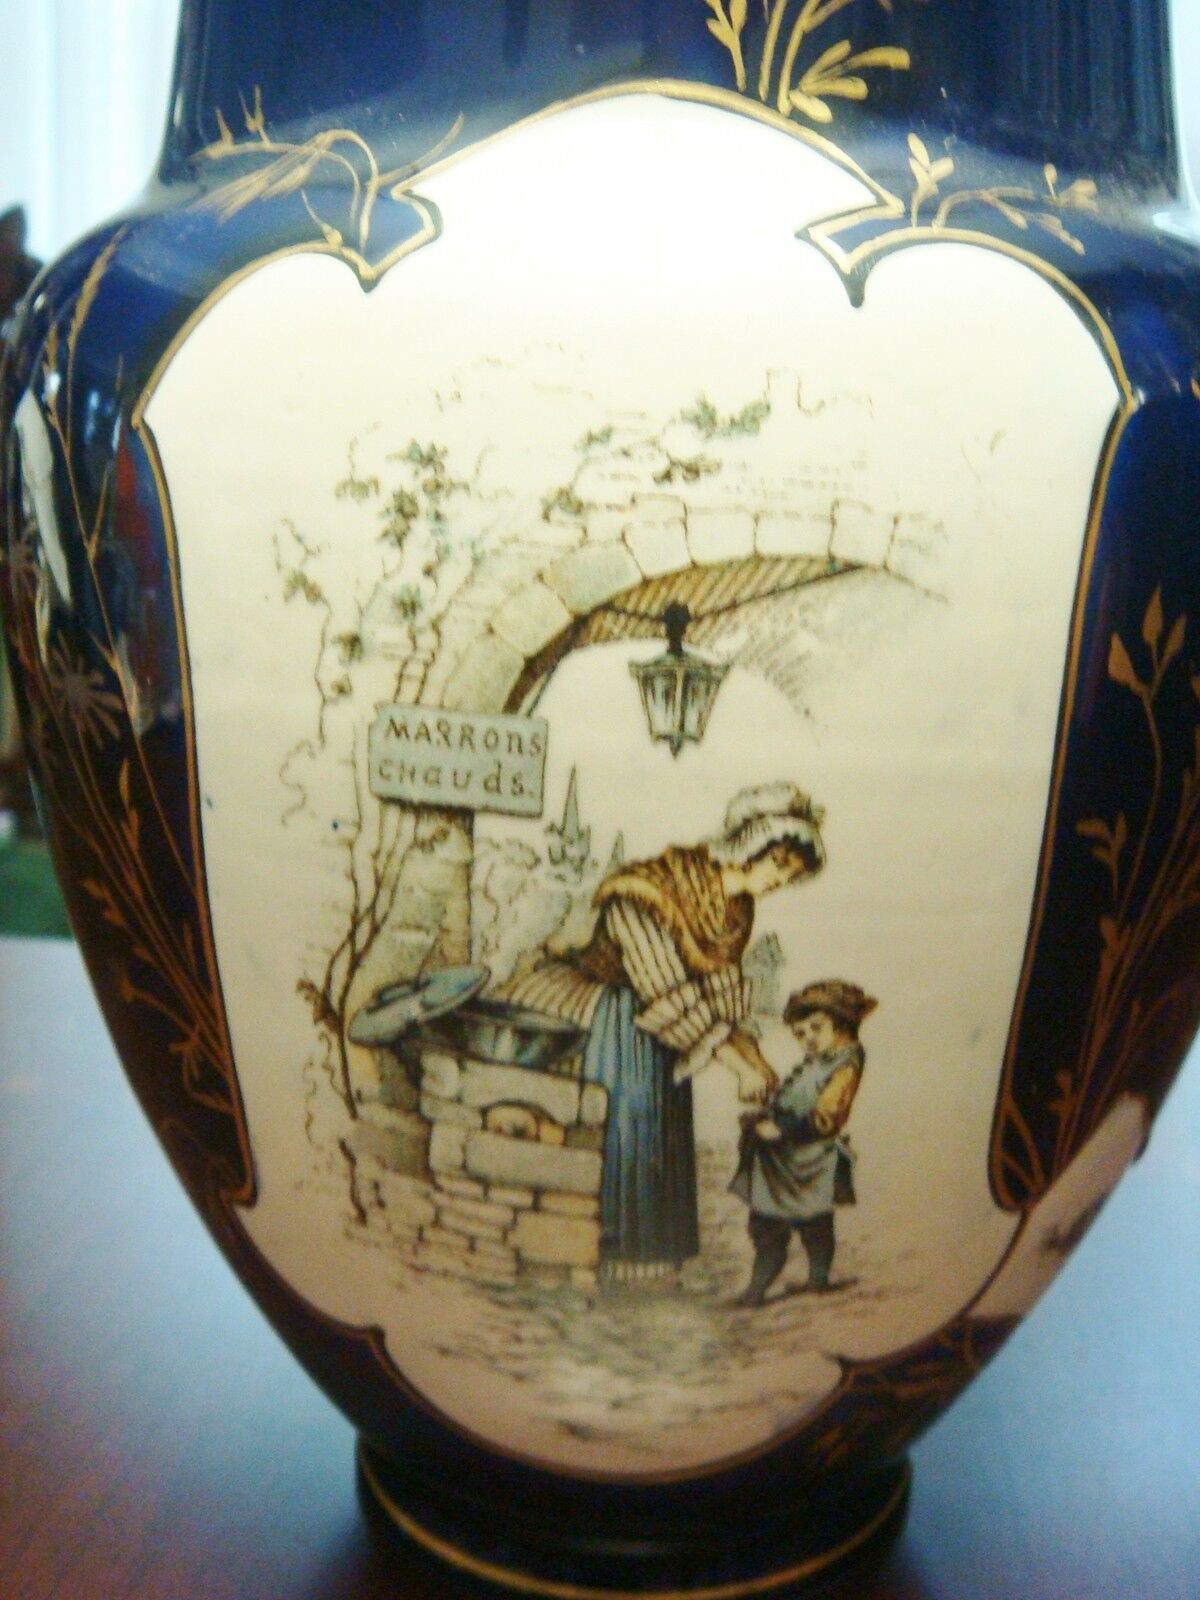 HAUTIN & BOULANGER Choisy-le-Roi, France- ca 1850s-1890s, black/dark blue vase[1